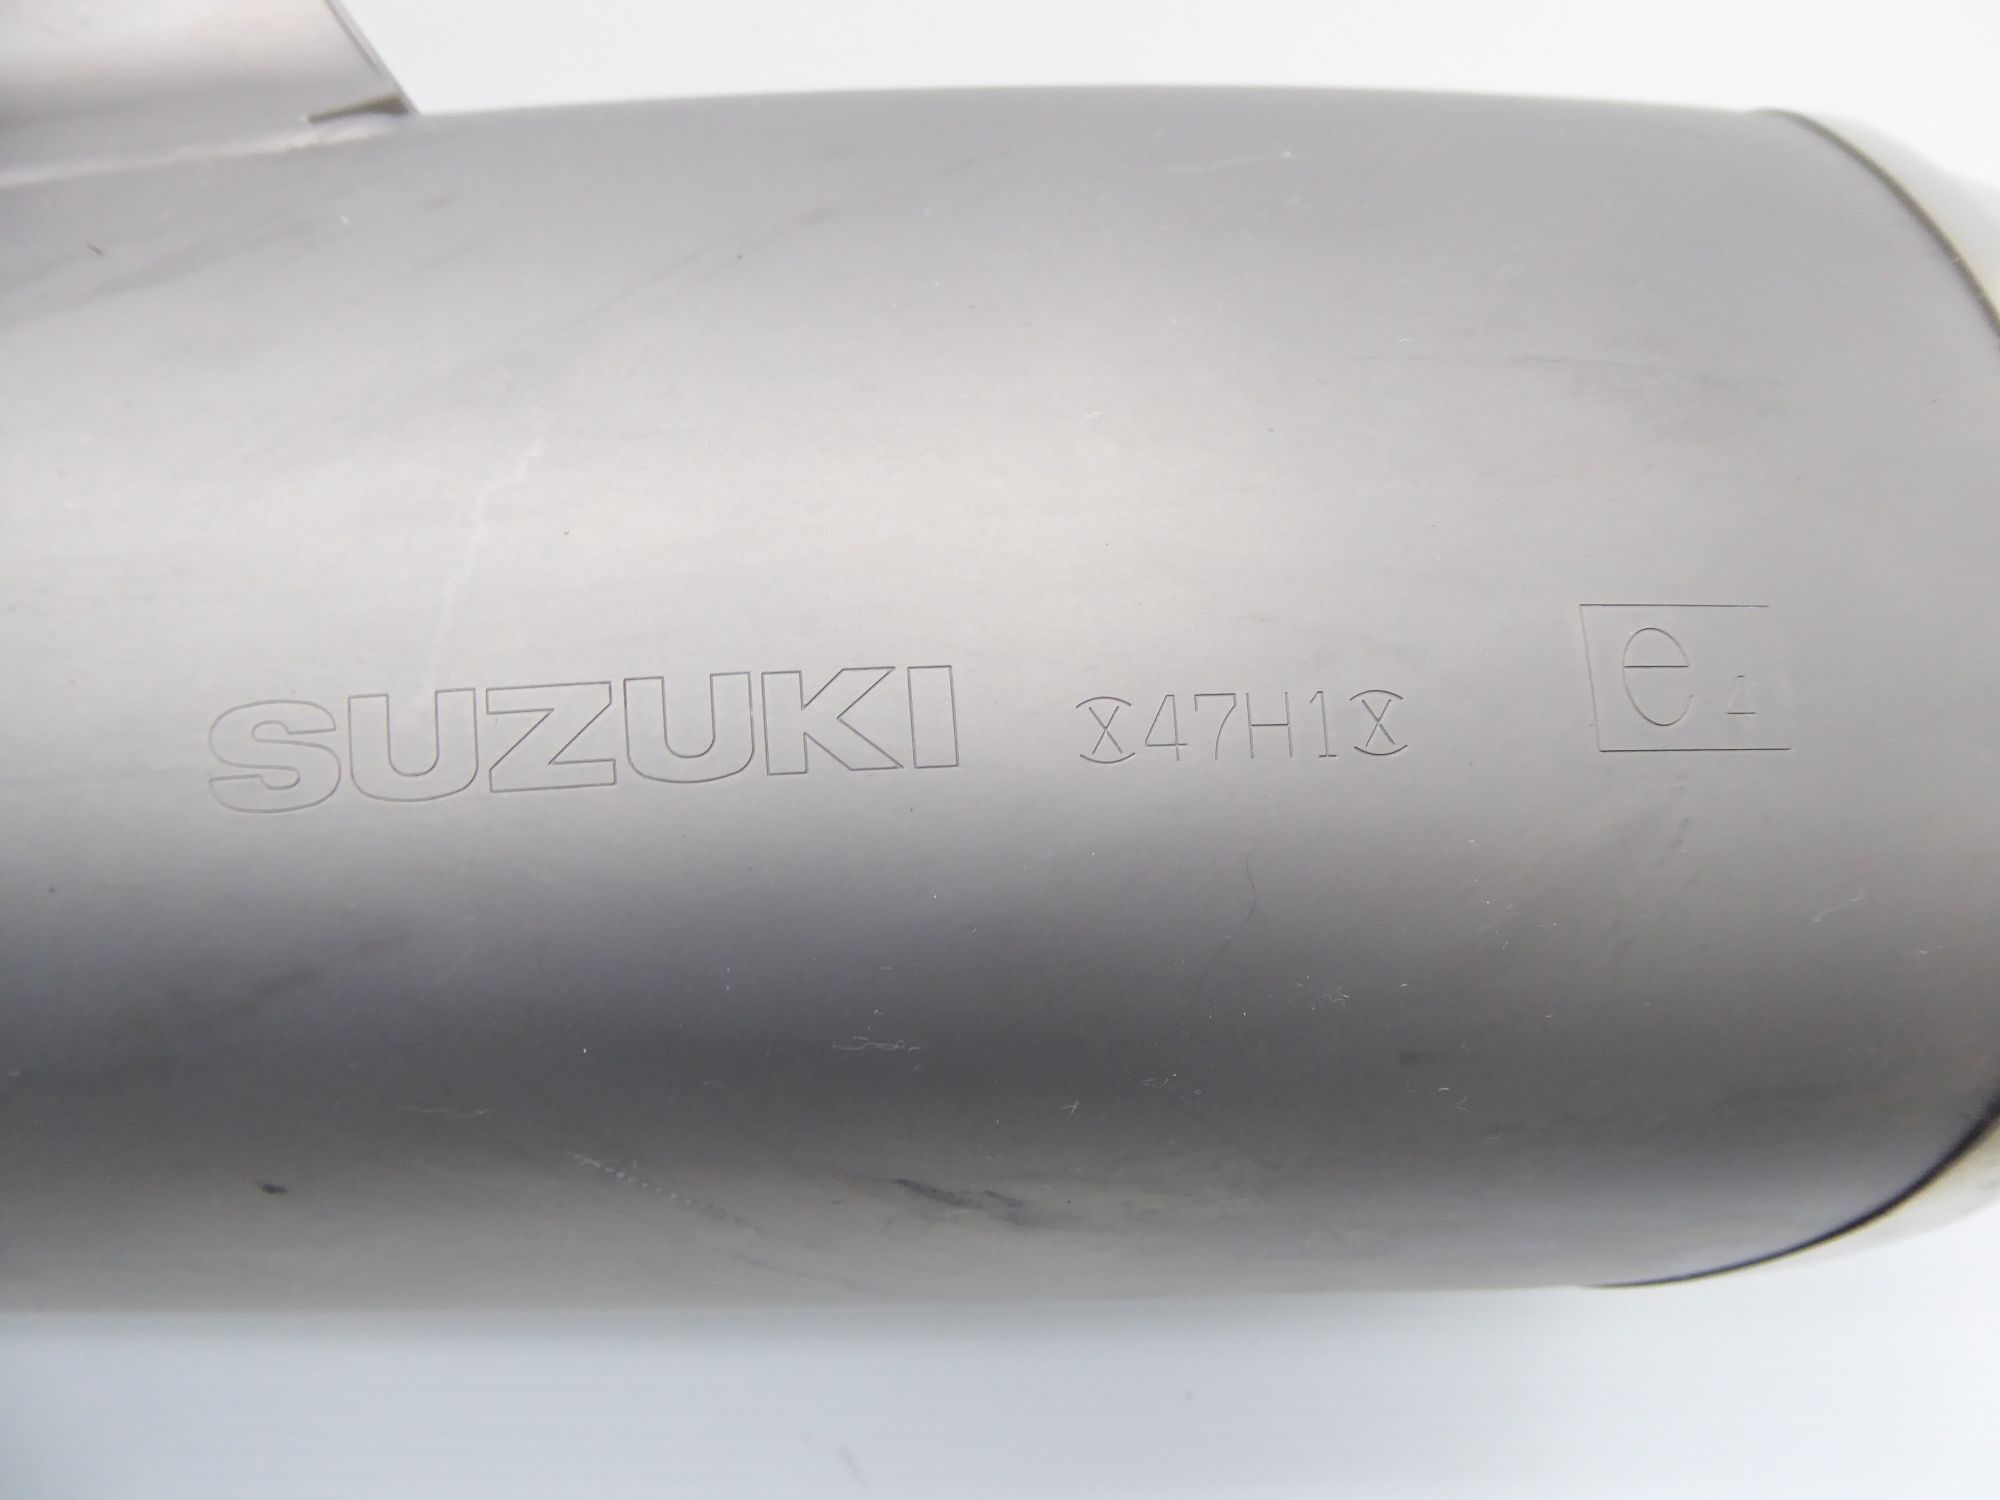 Suzuki GSX-R 1000 09-10 Silencieux d'échappement gauche 14340-47H10